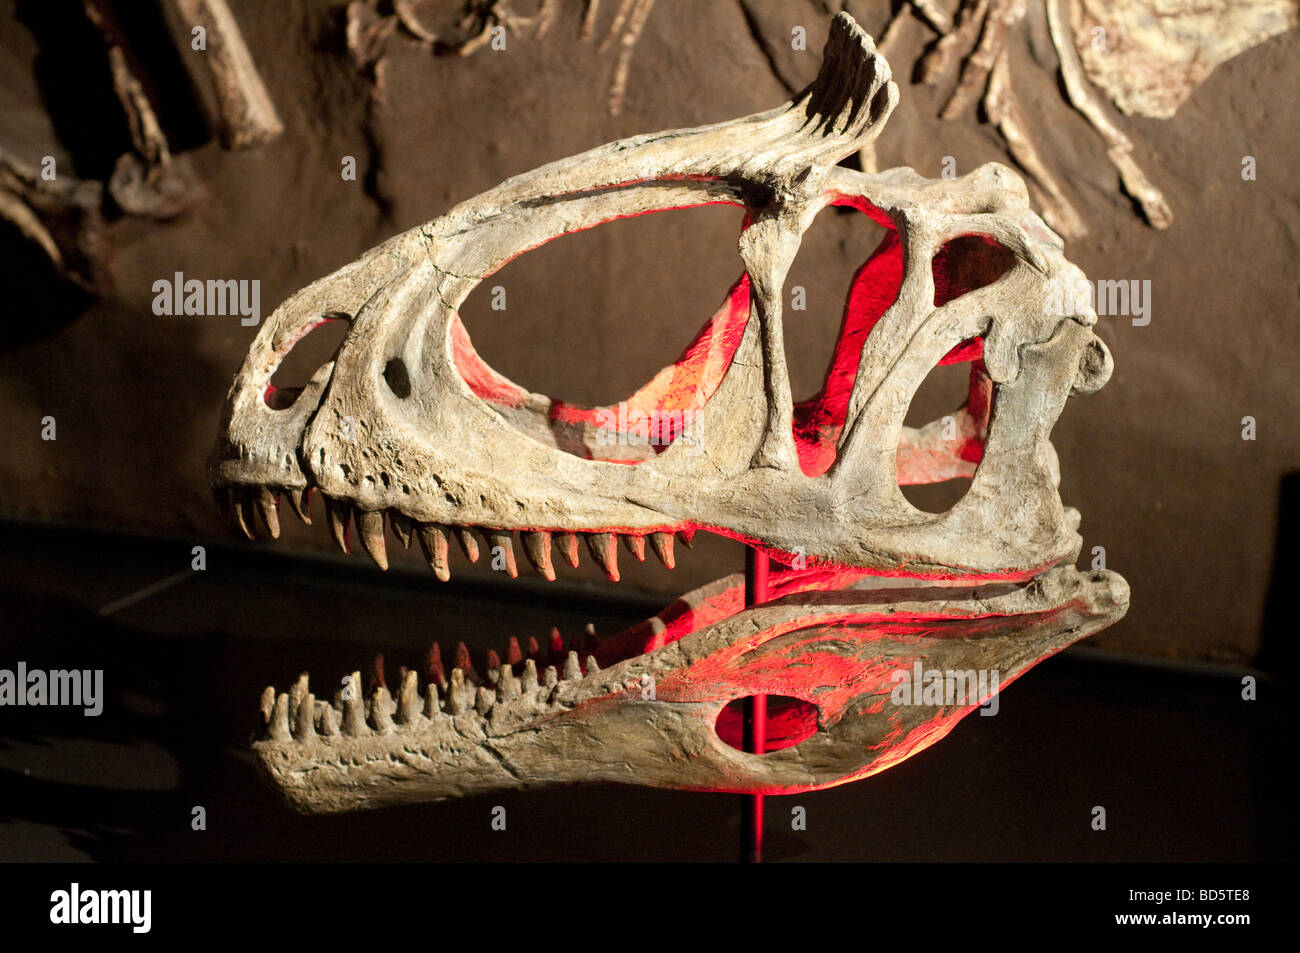 Cast of Cryolophosaurus ellioti skull Early Jurassic period Australian Museum Sydney NSW Australia Stock Photo